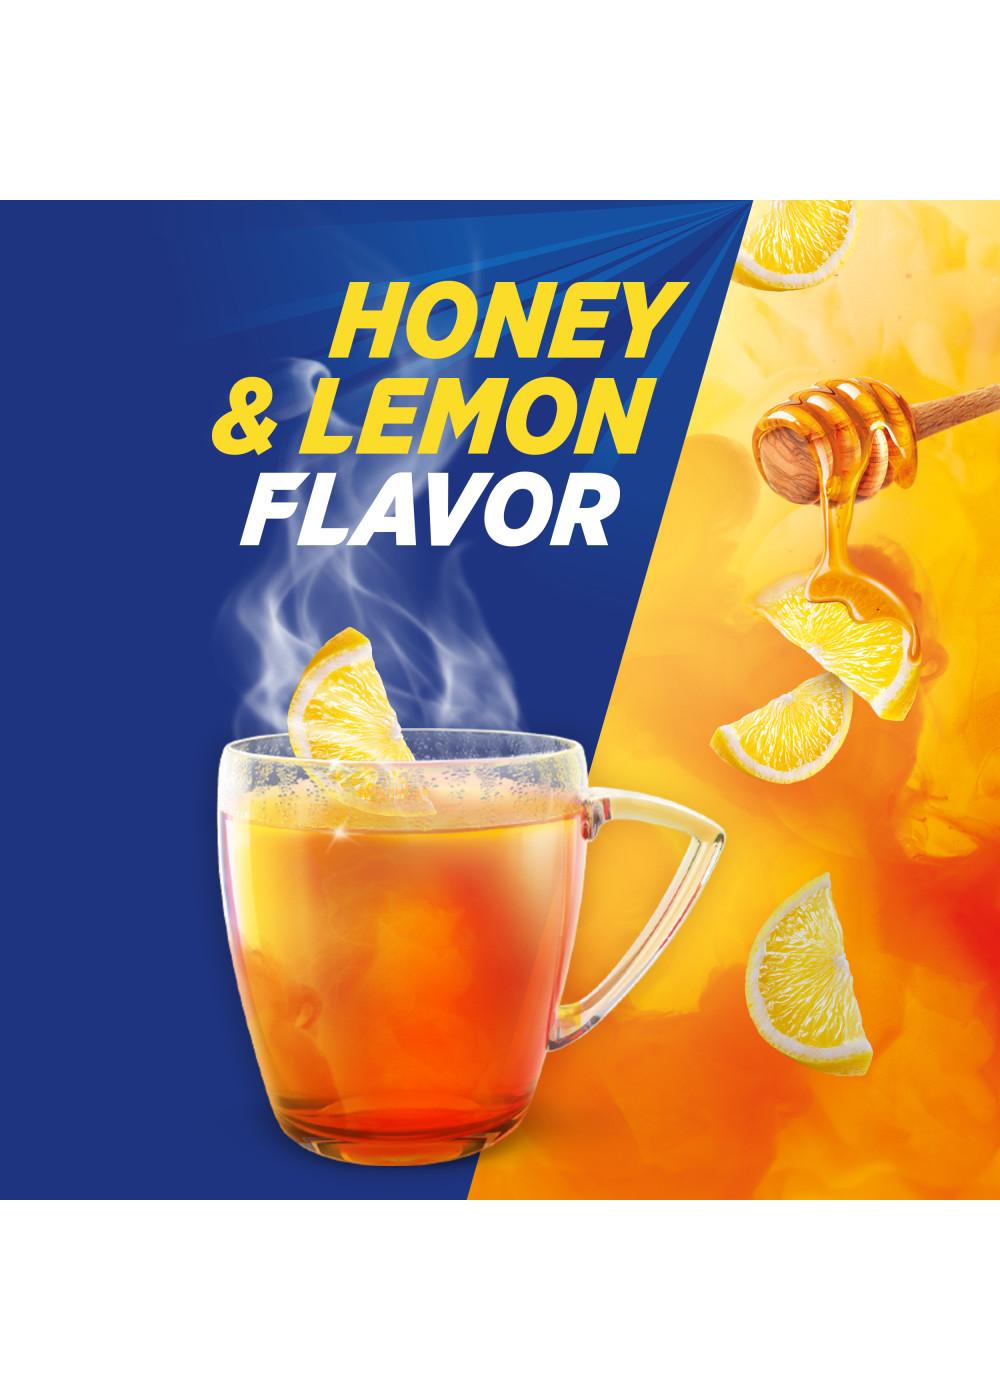 Theraflu Daytime Flu Relief Max Strength Packets - Honey Lemon ; image 4 of 8